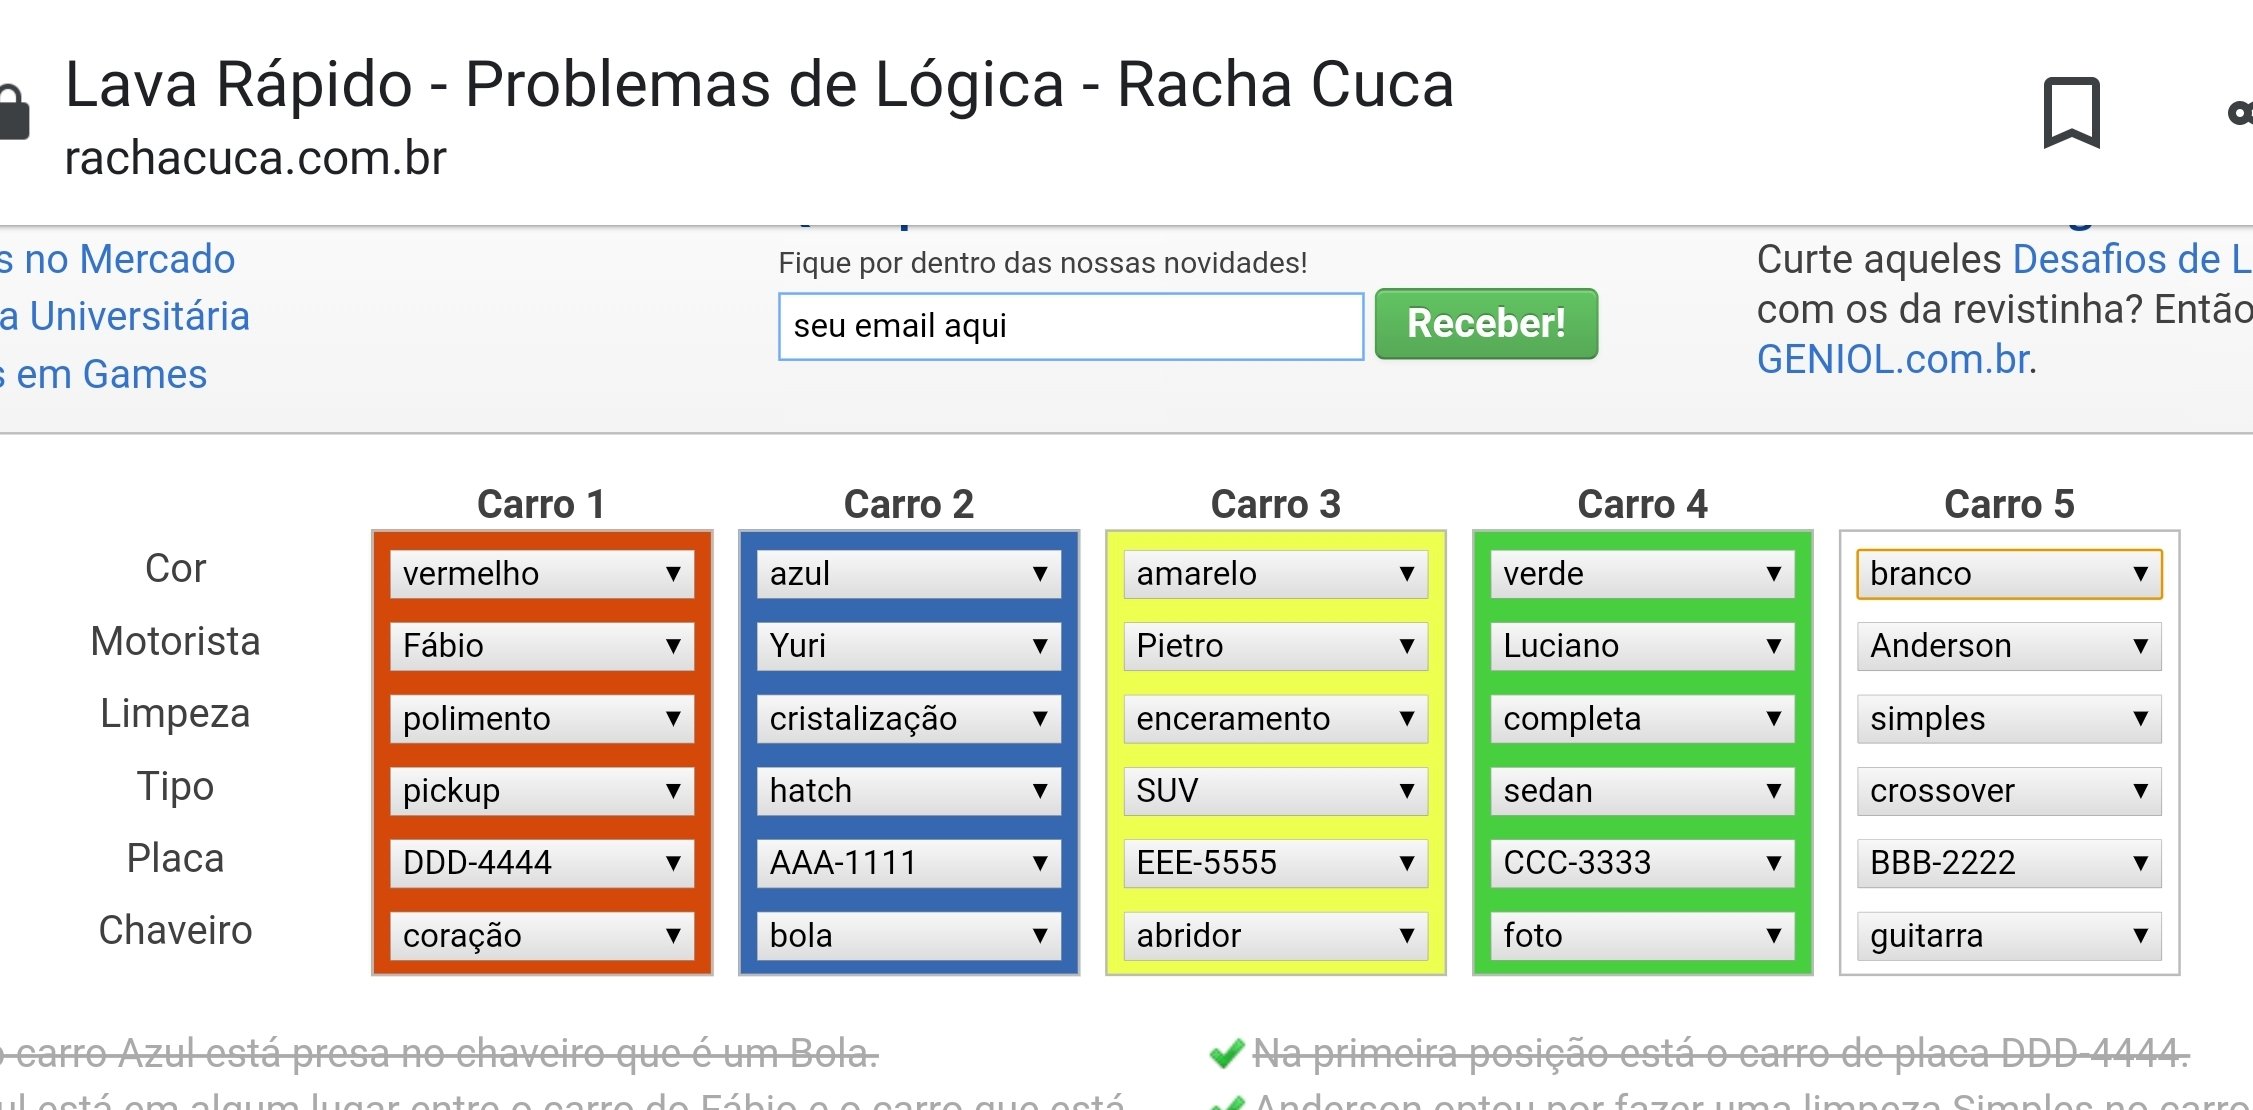 Problemas de lógica: layout auto-explicativo. Fonte: rachacuca.com.br